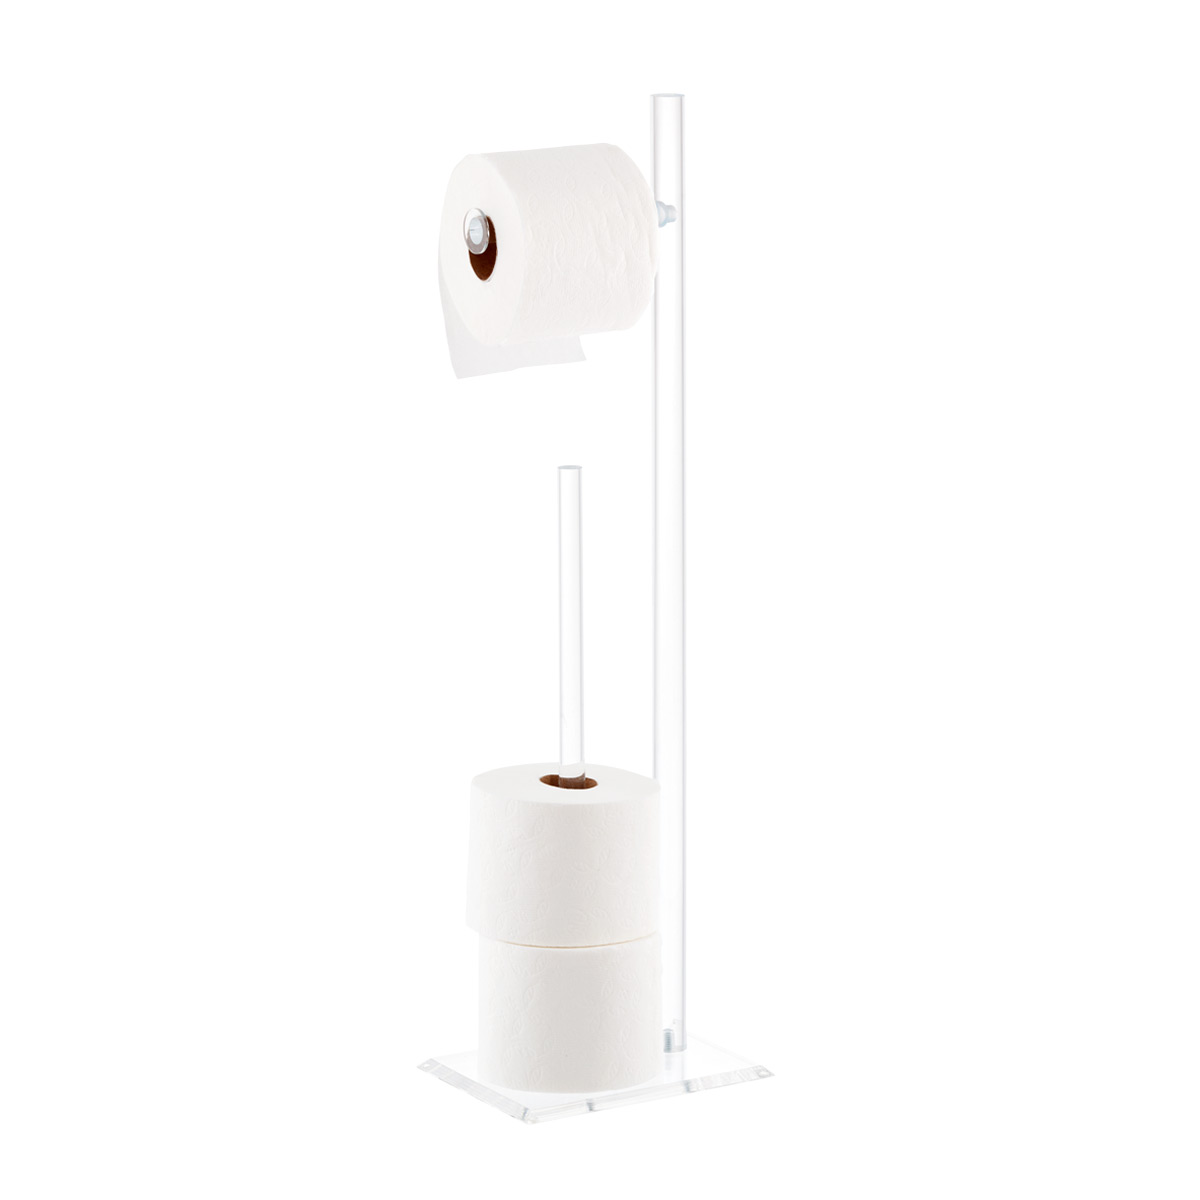 Modern Toilet Paper Holder Free Standing Roll Holder Storage